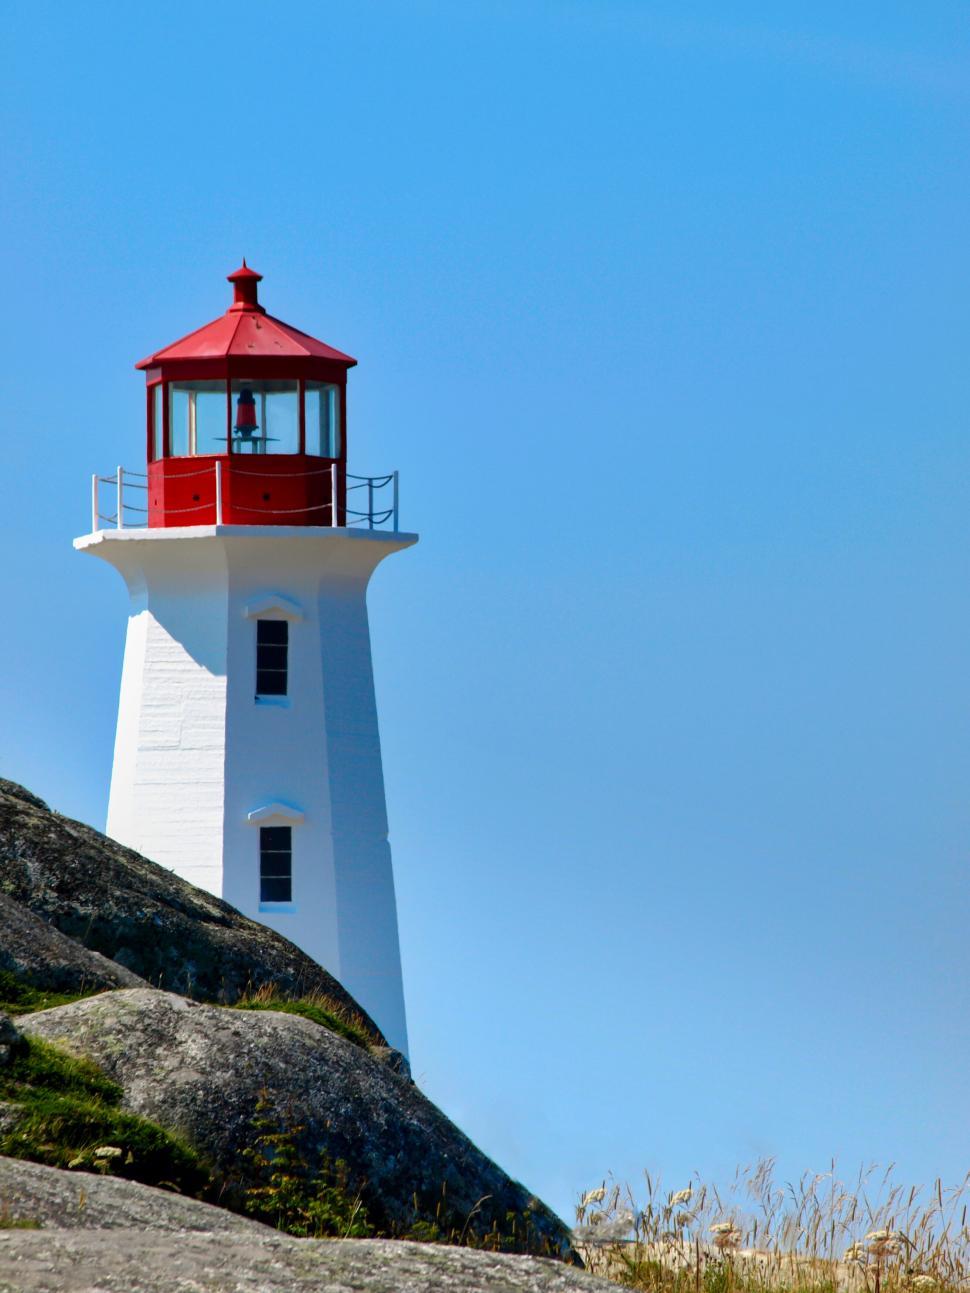 Free Image of Lighthouse on rocky coastline under blue sky 